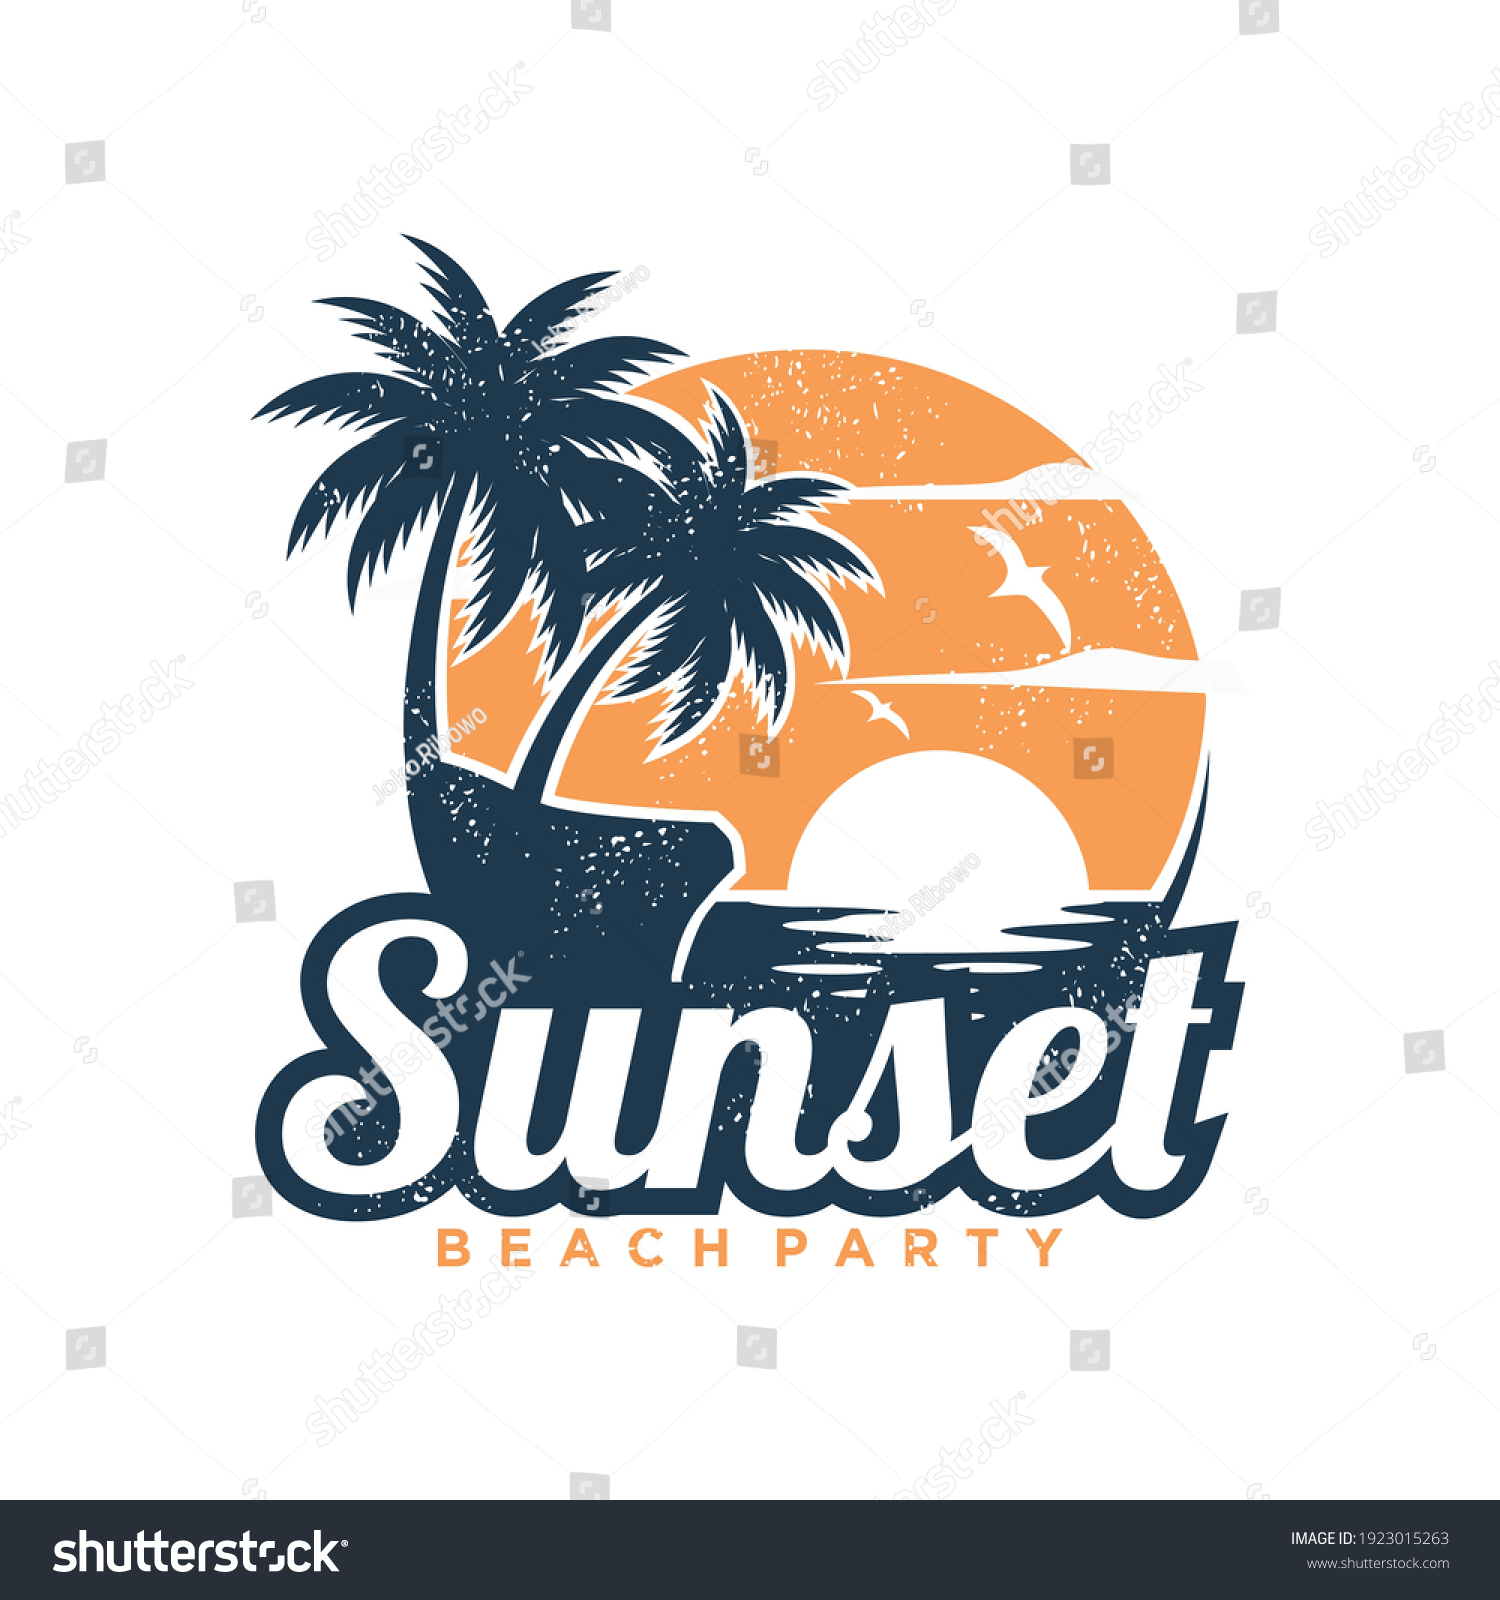 1,028,166 Logo of summer Images, Stock Photos & Vectors | Shutterstock